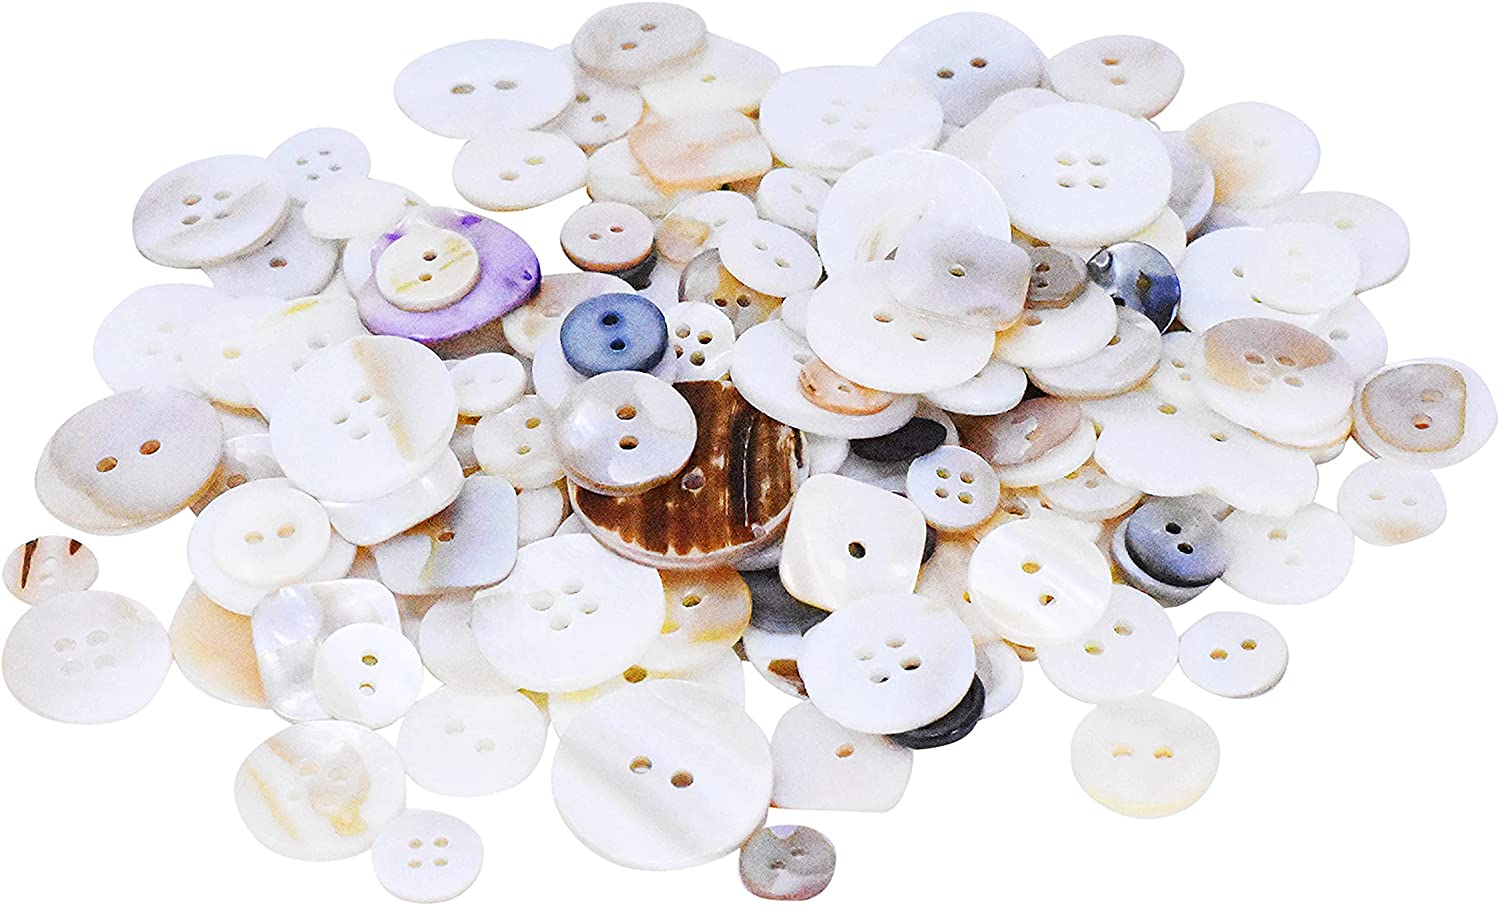 Medium Round Mother of Pearl Buttons from Kelmscott Design ~ pkg